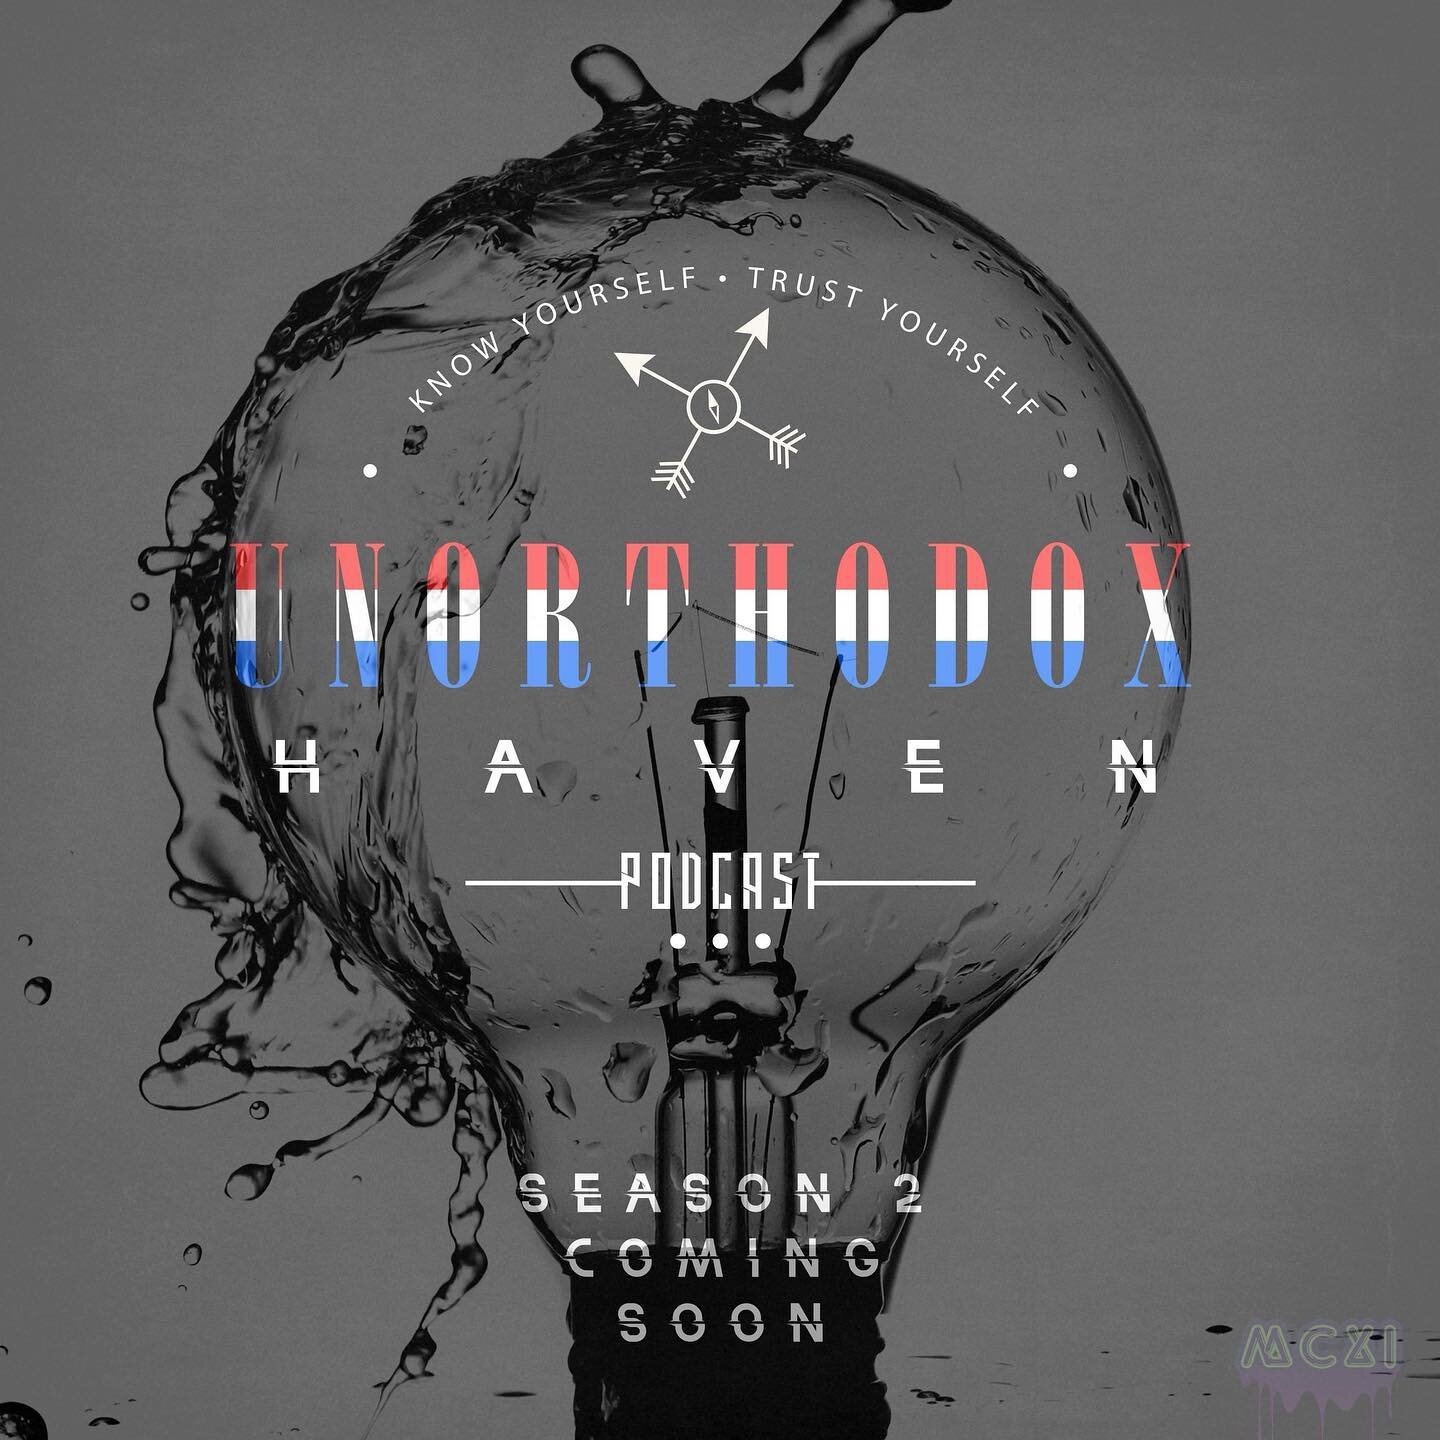 Unorthodox Haven Podcast Season 2 coming soon! 
#UnorthodoxHavenPodcast
#MXCI
#11111111
#1111